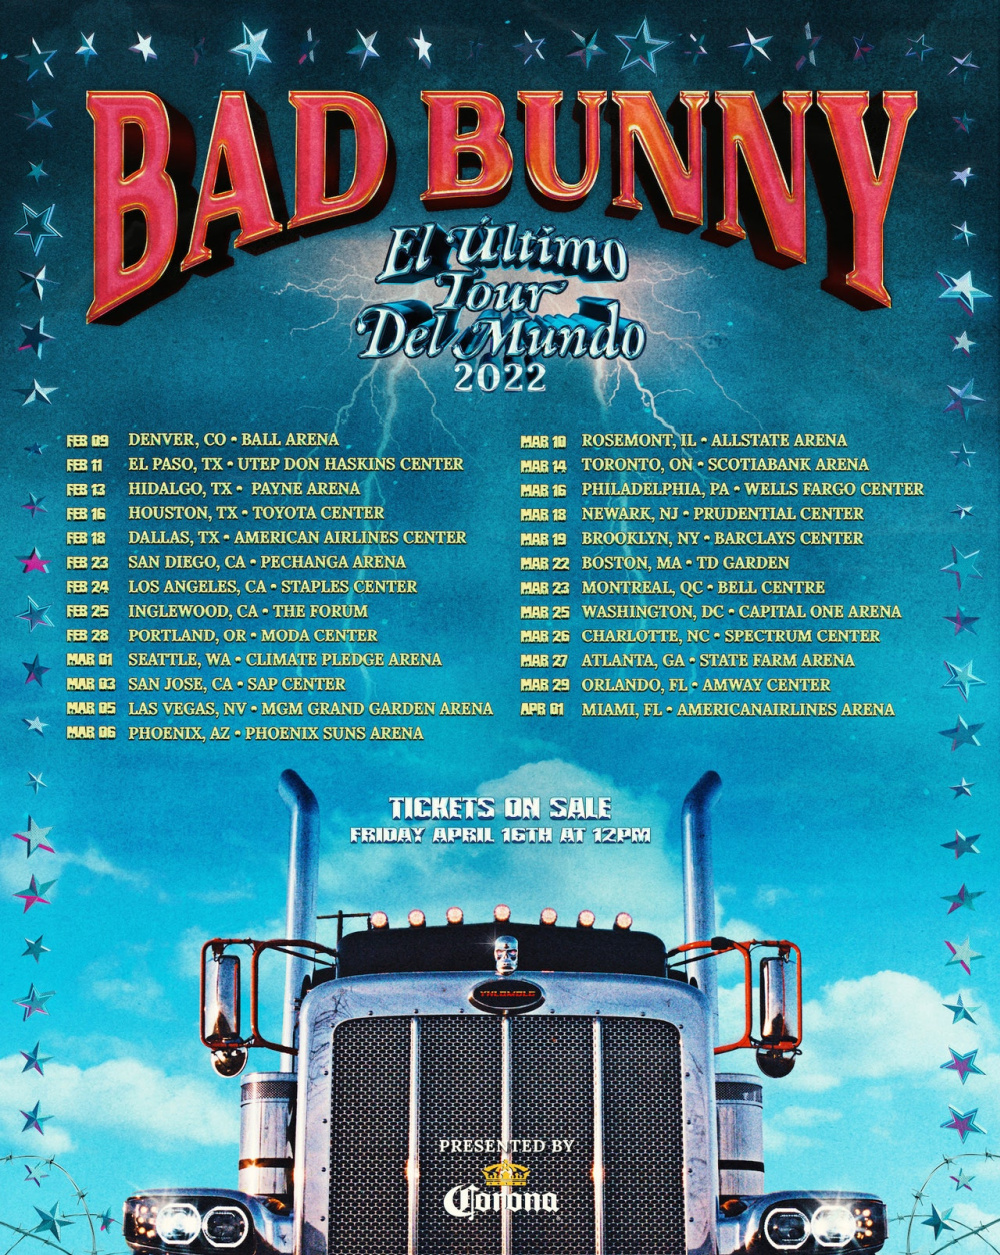 Bad Bunny 2022 tour dates